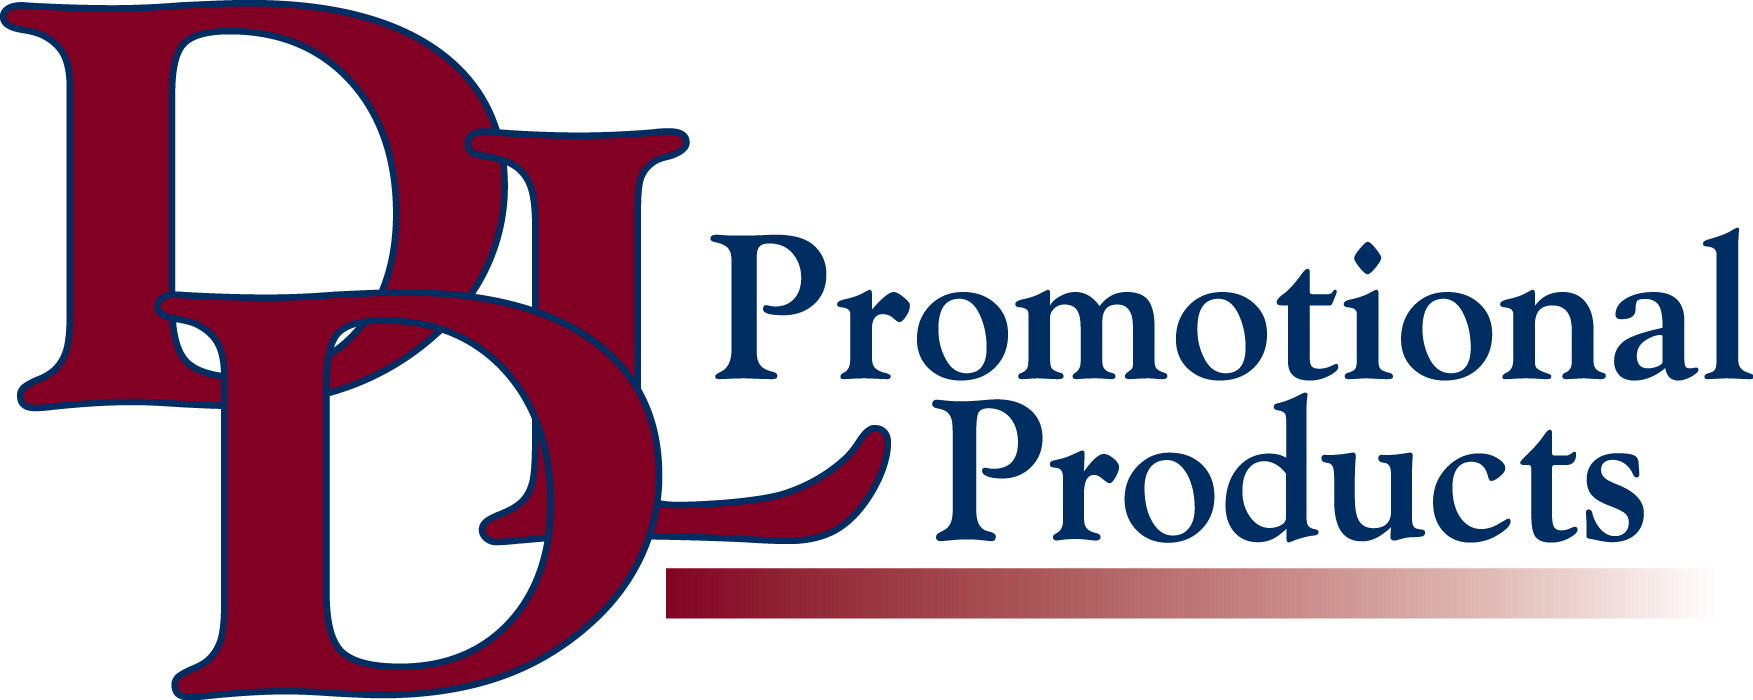 DDL Business Products LLC's Logo